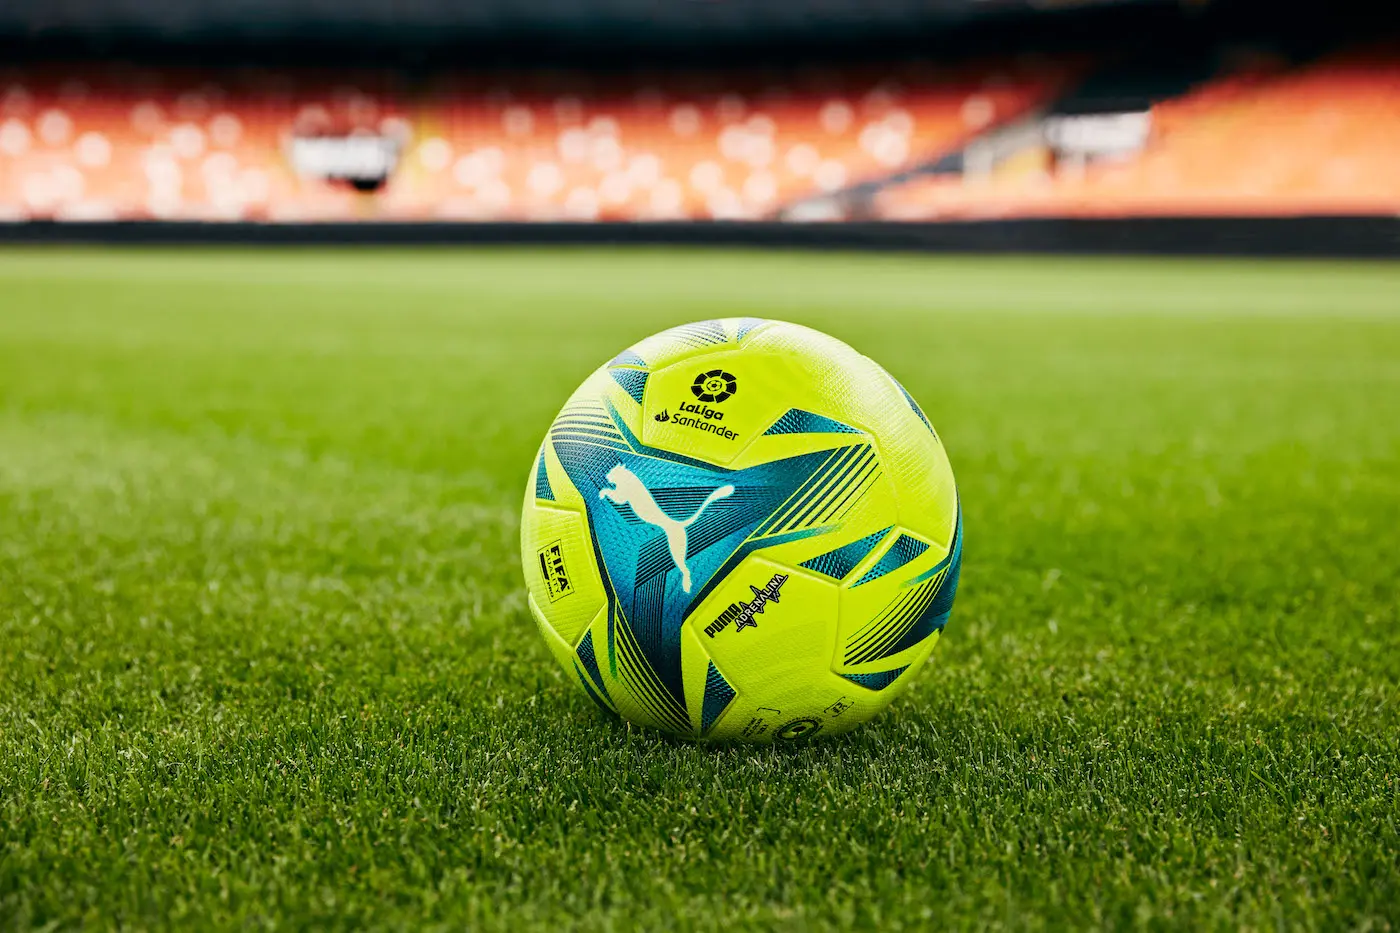 Adrenalina match ball for the 202122 laliga season 2